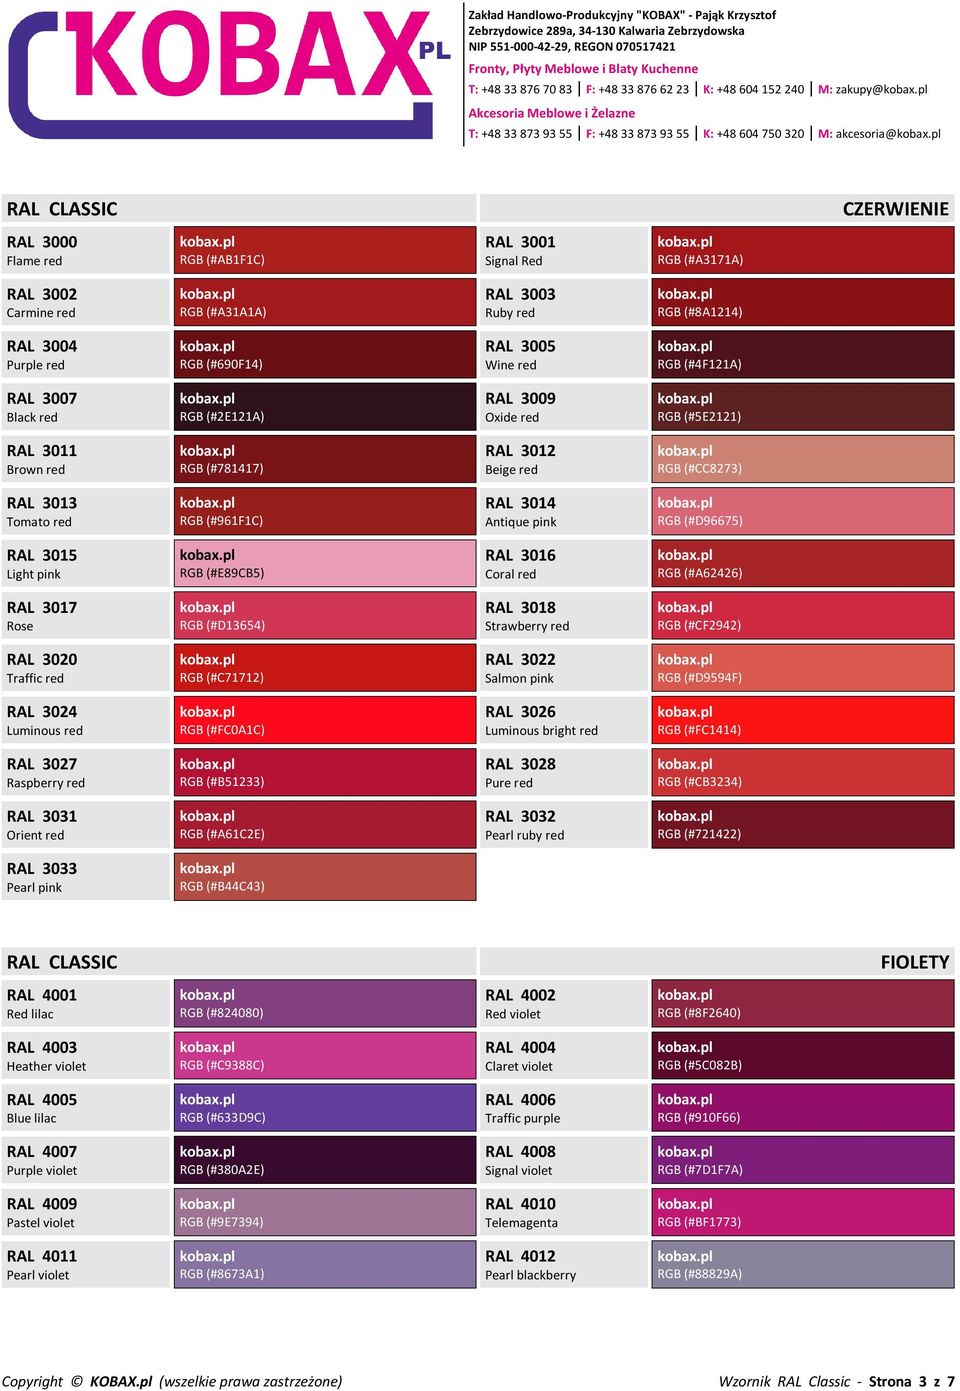 Oxide red RGB (#5E2121) RAL 3011 Brown red RGB (#781417) RAL 3012 Beige red RGB (#CC8273) RAL 3013 Tomato red RGB (#961F1C) RAL 3014 Antique pink RGB (#D96675) RAL 3015 Light pink RGB (#E89CB5) RAL